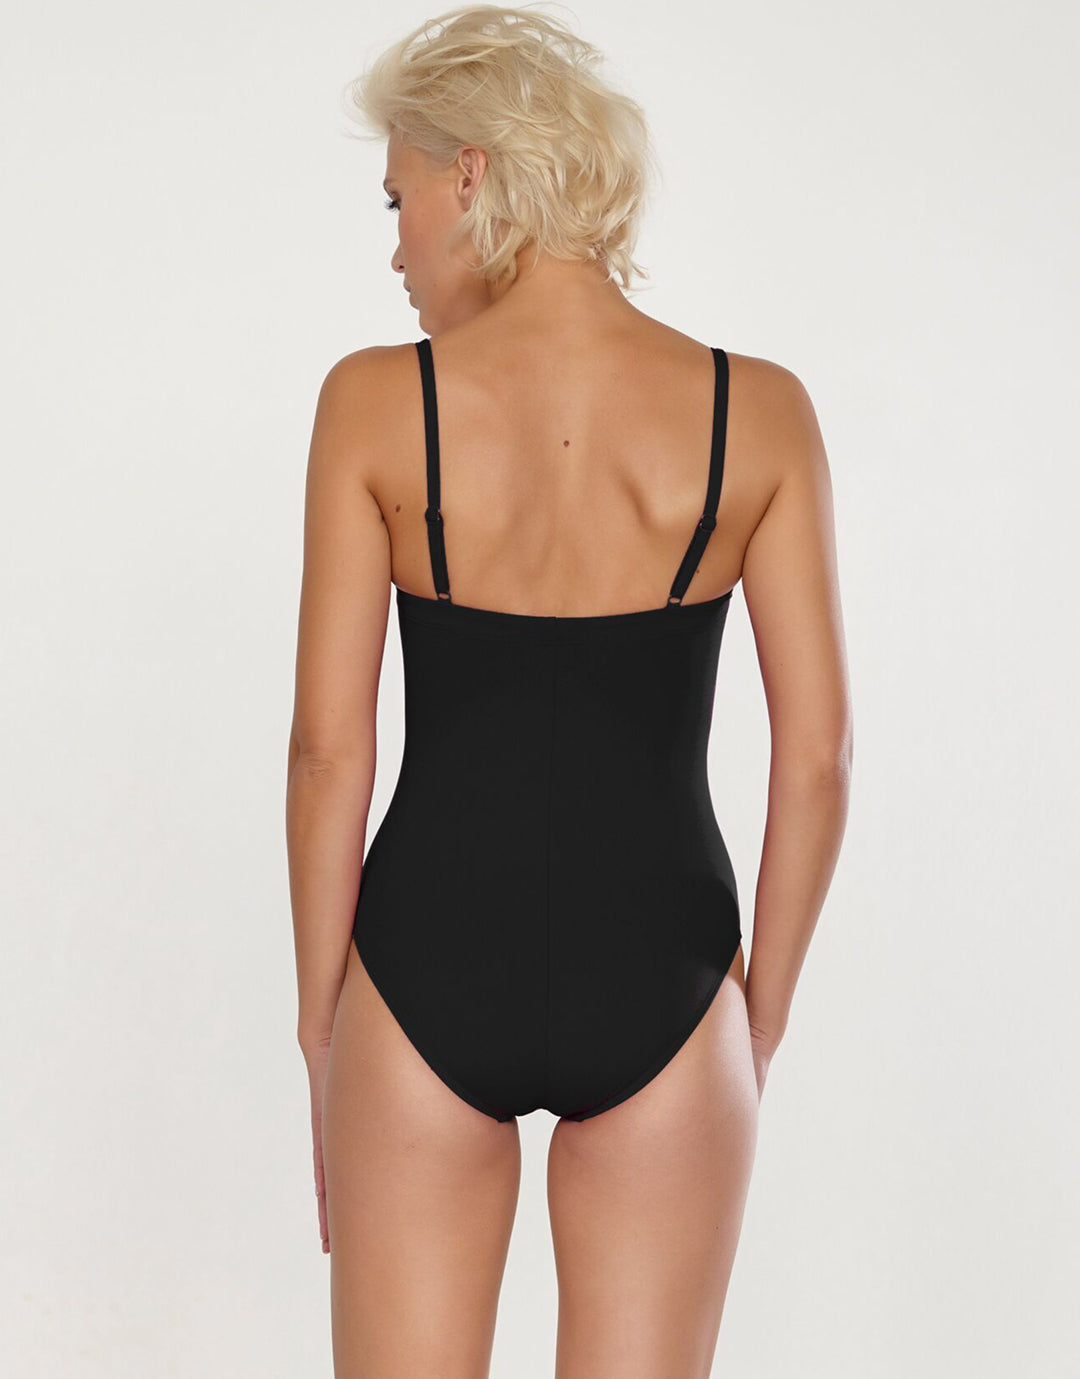 Softline Square Shape Swimsuit - Black - Simply Beach UK